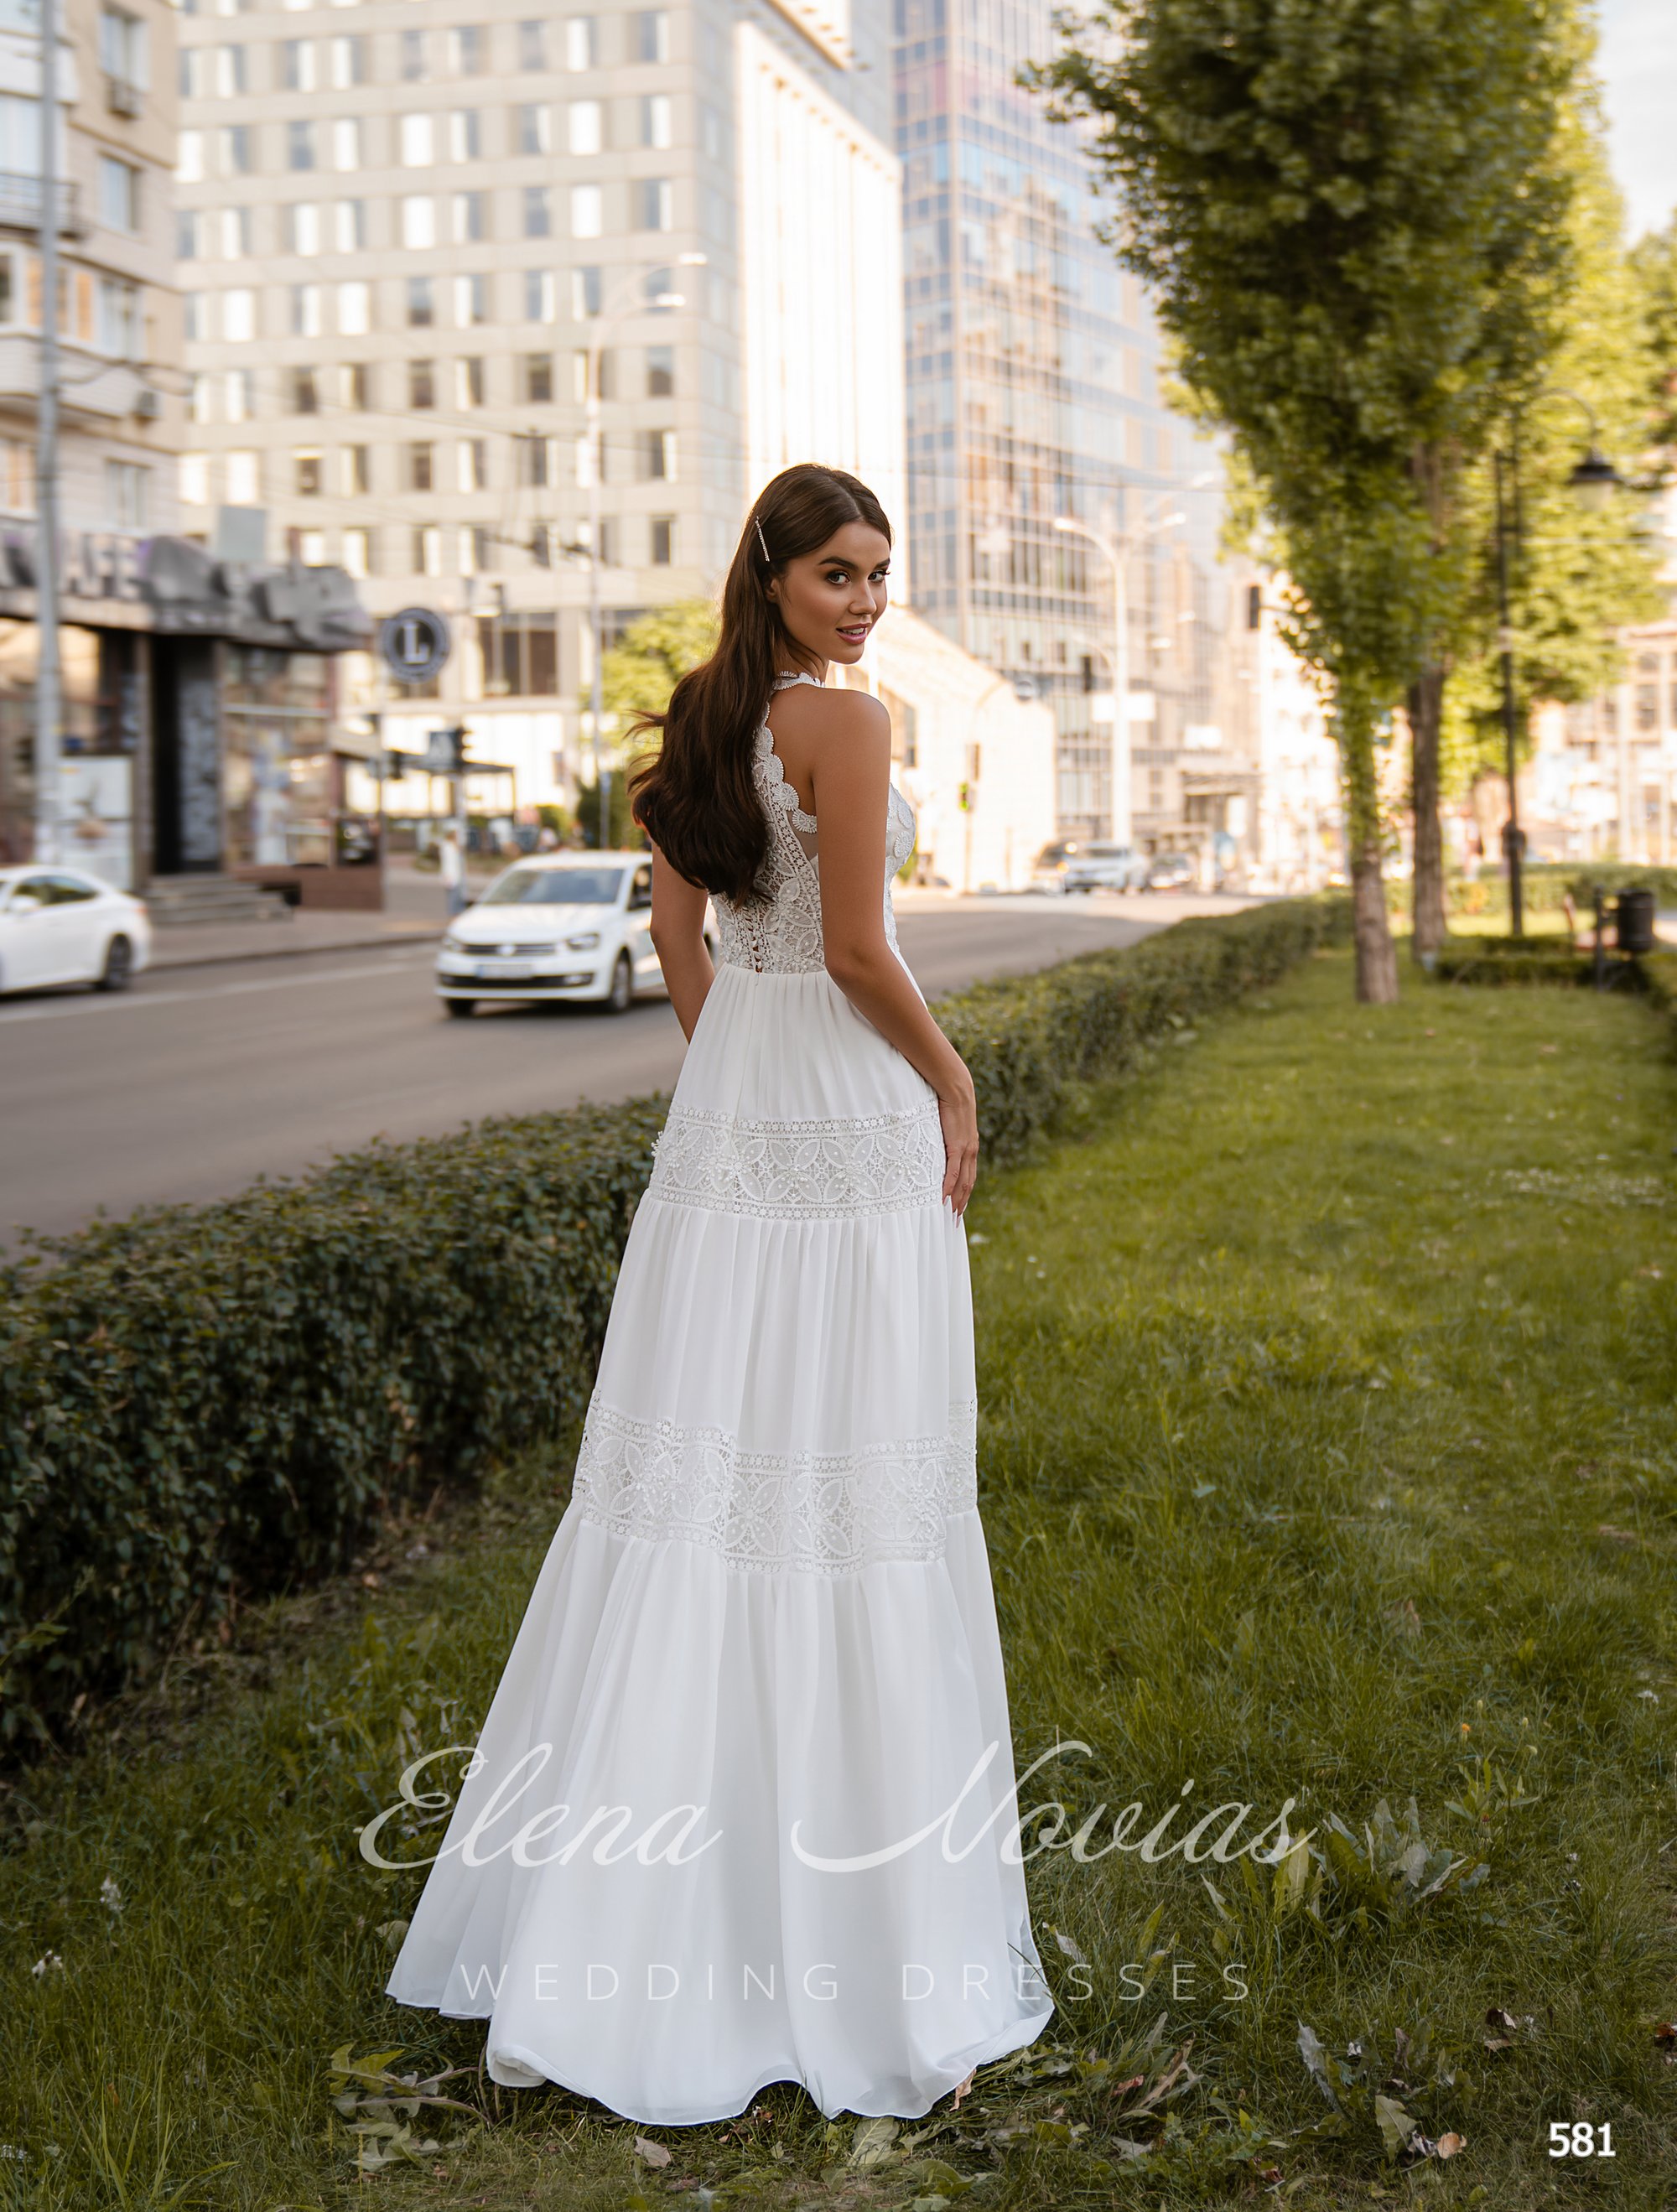 Wedding dresses 581 2